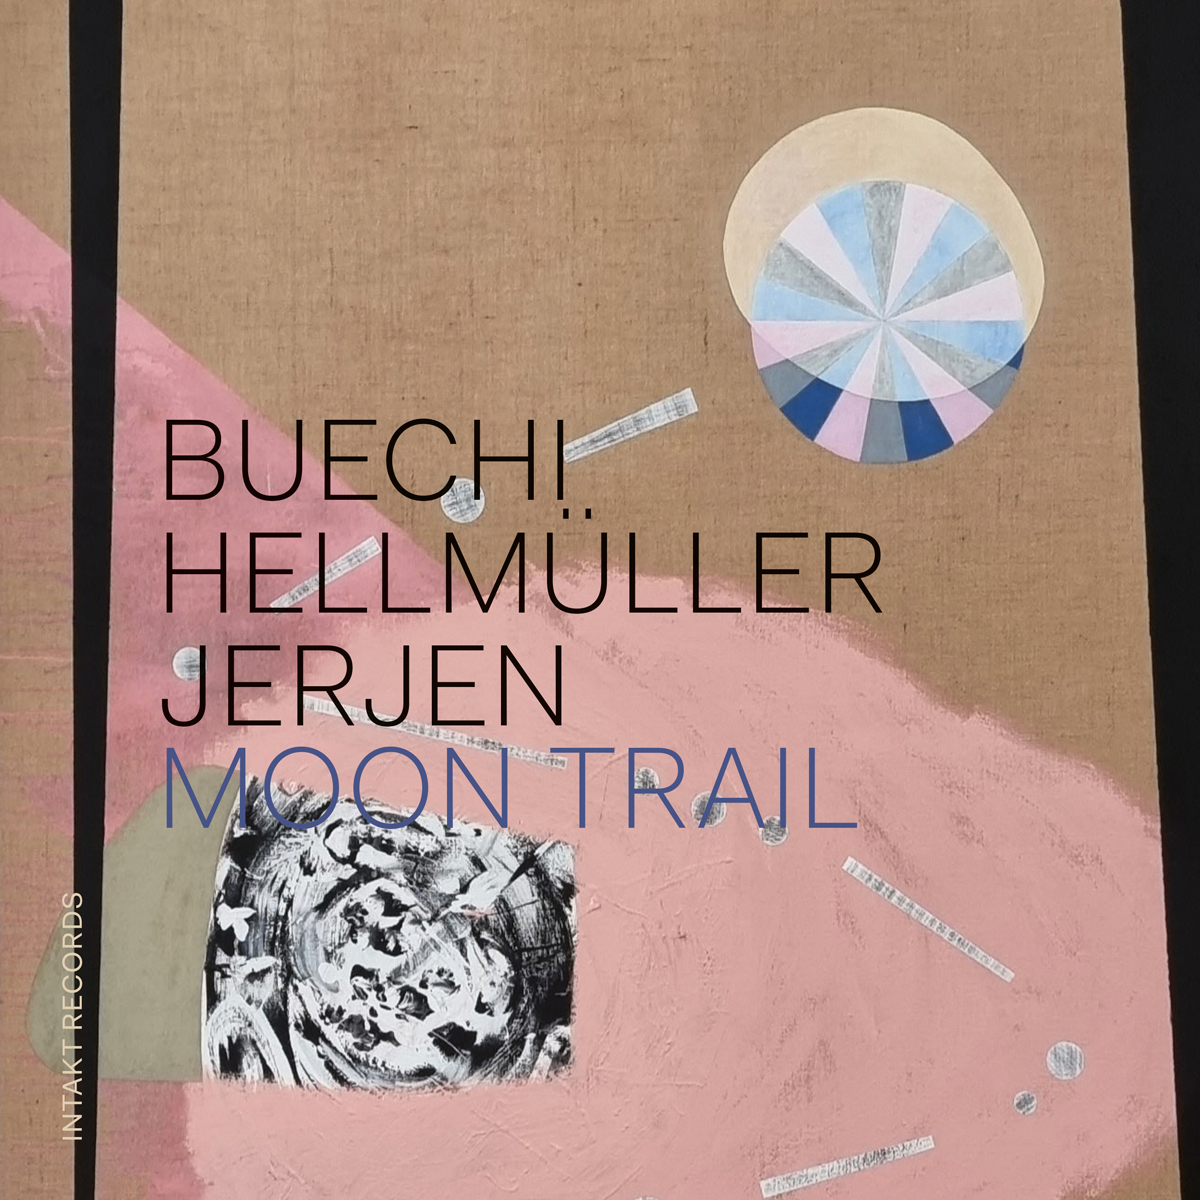 Cover Web:BUECHI – HELLMÜLLER – JERJEN.
MOON TRAIL. Intakt Records CD 390